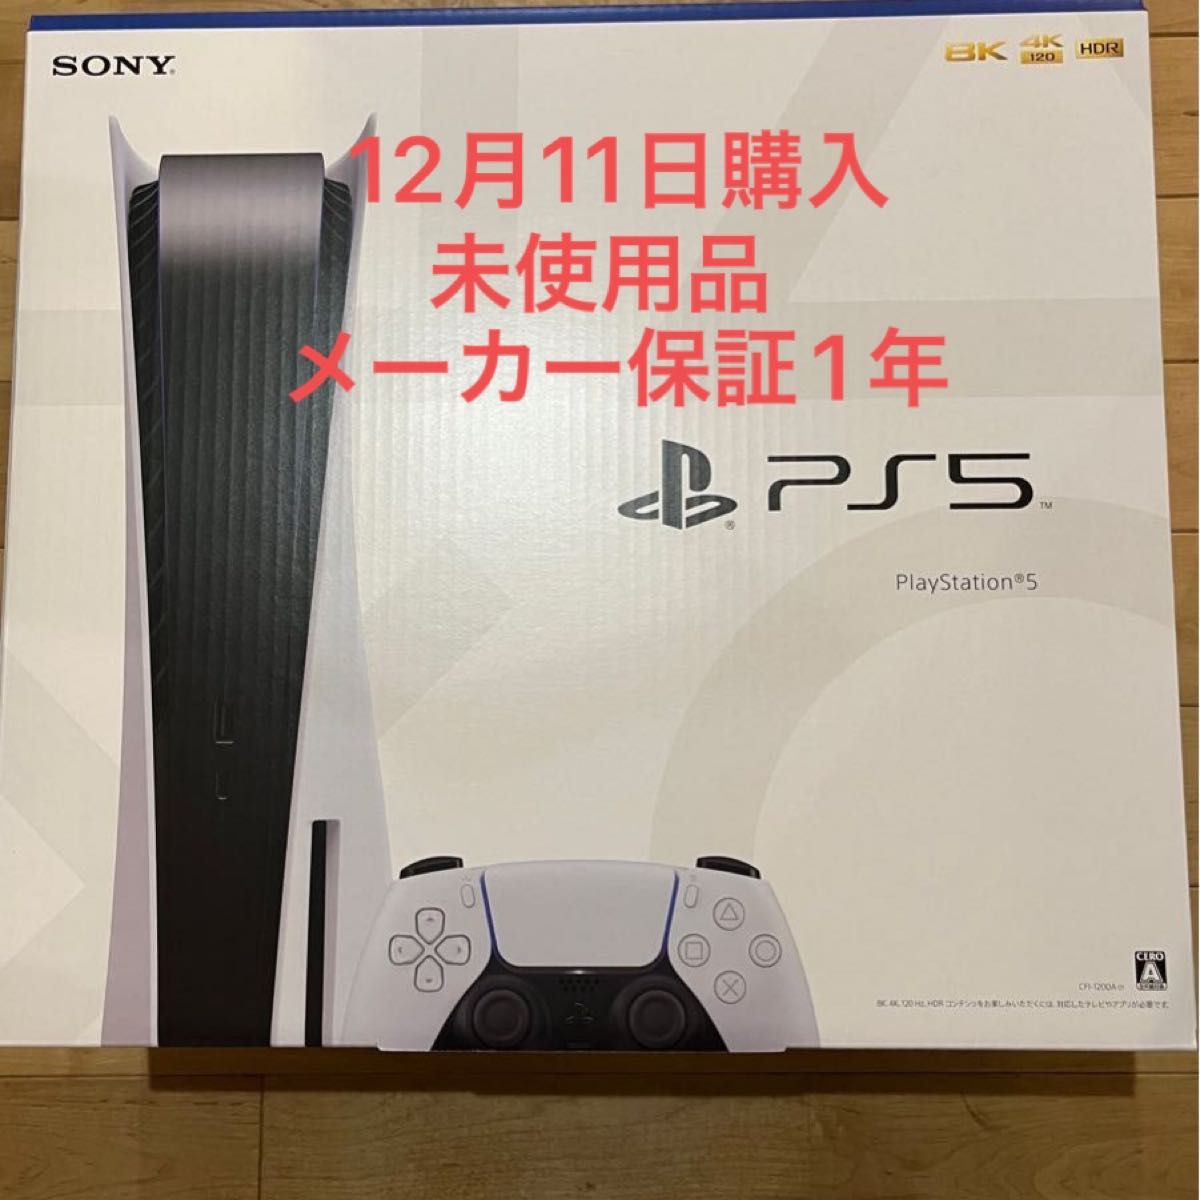 新品・未開封品 領収書 購入明細あり 新型 PS5 本体 PlayStation5